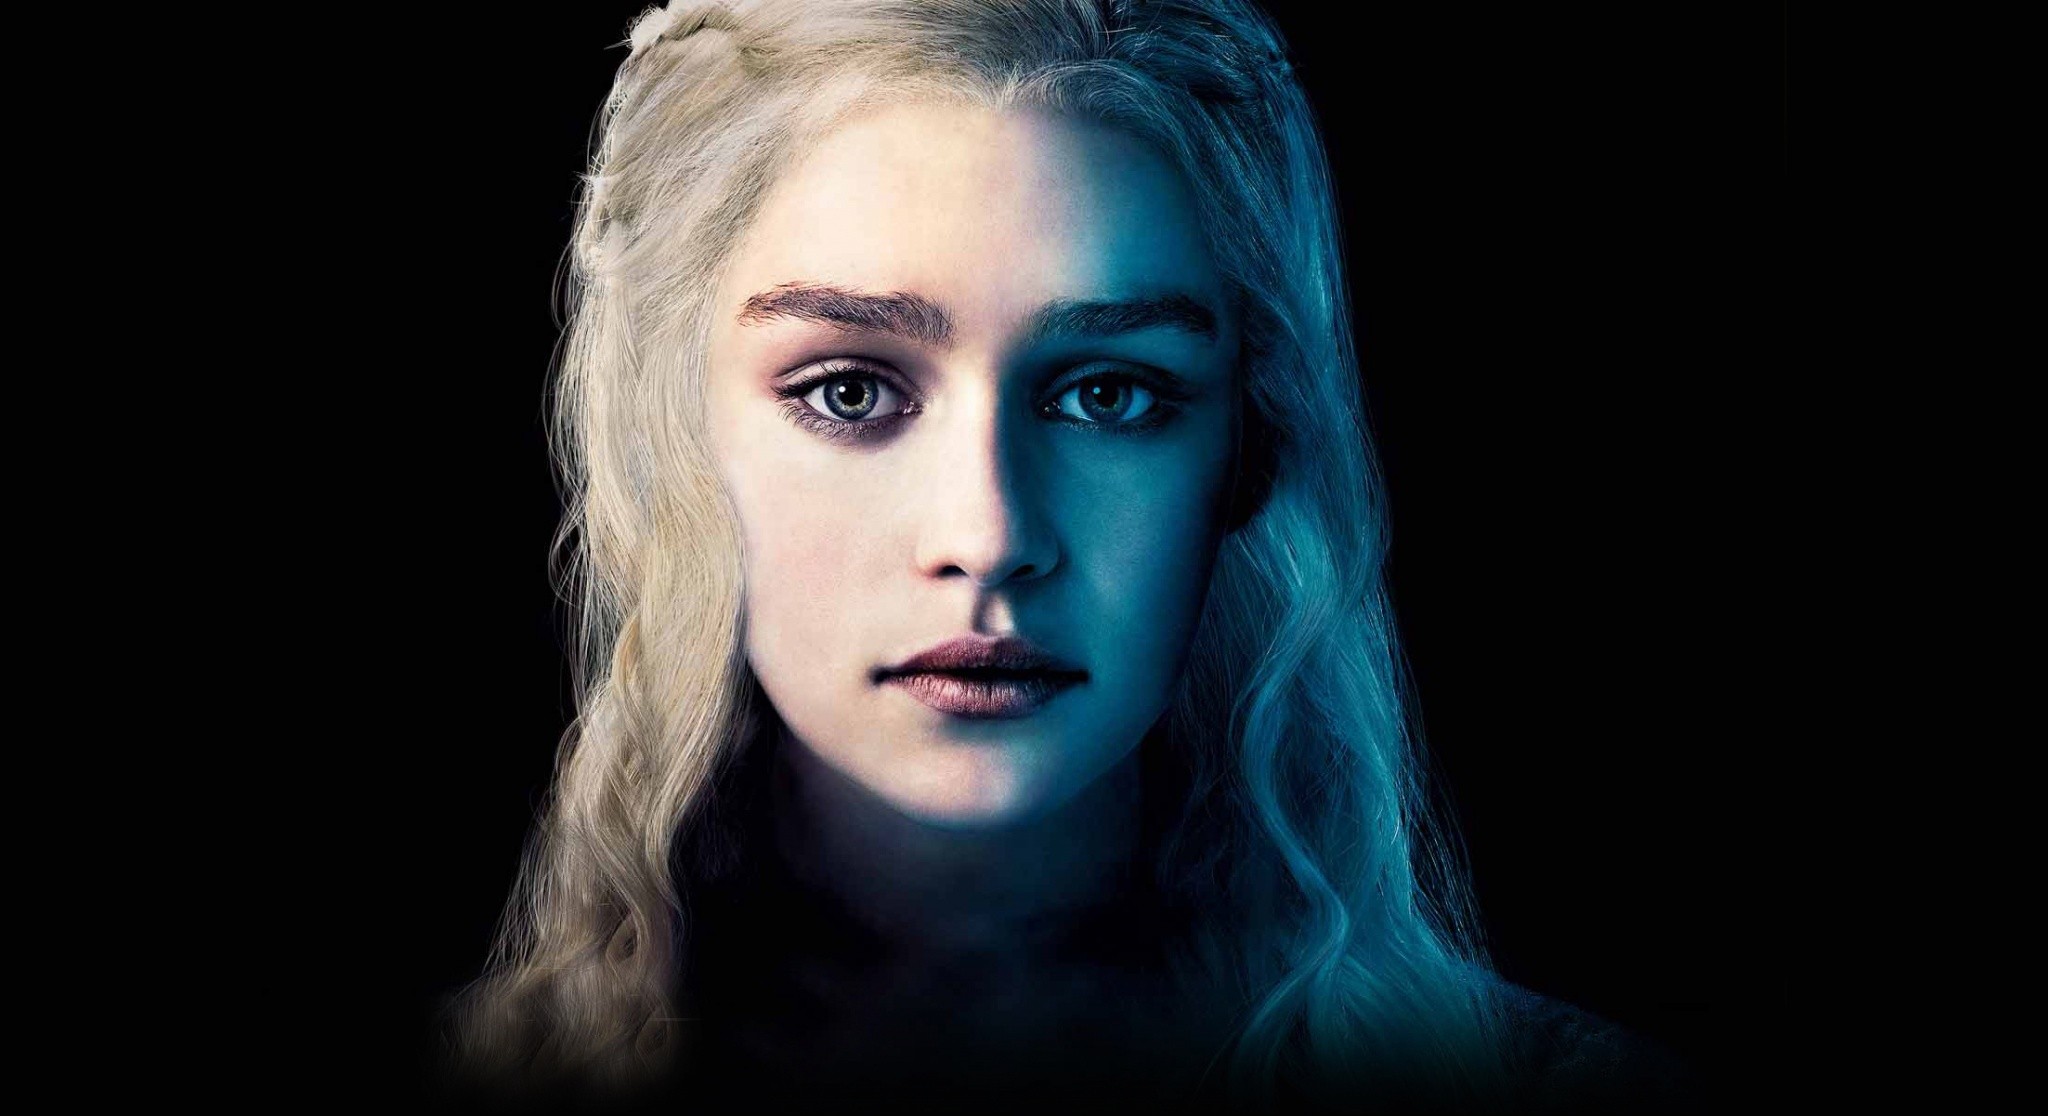 People 2048x1116 Game of Thrones Daenerys Targaryen Emilia Clarke fantasy girl TV series pale simple background black background blonde face women